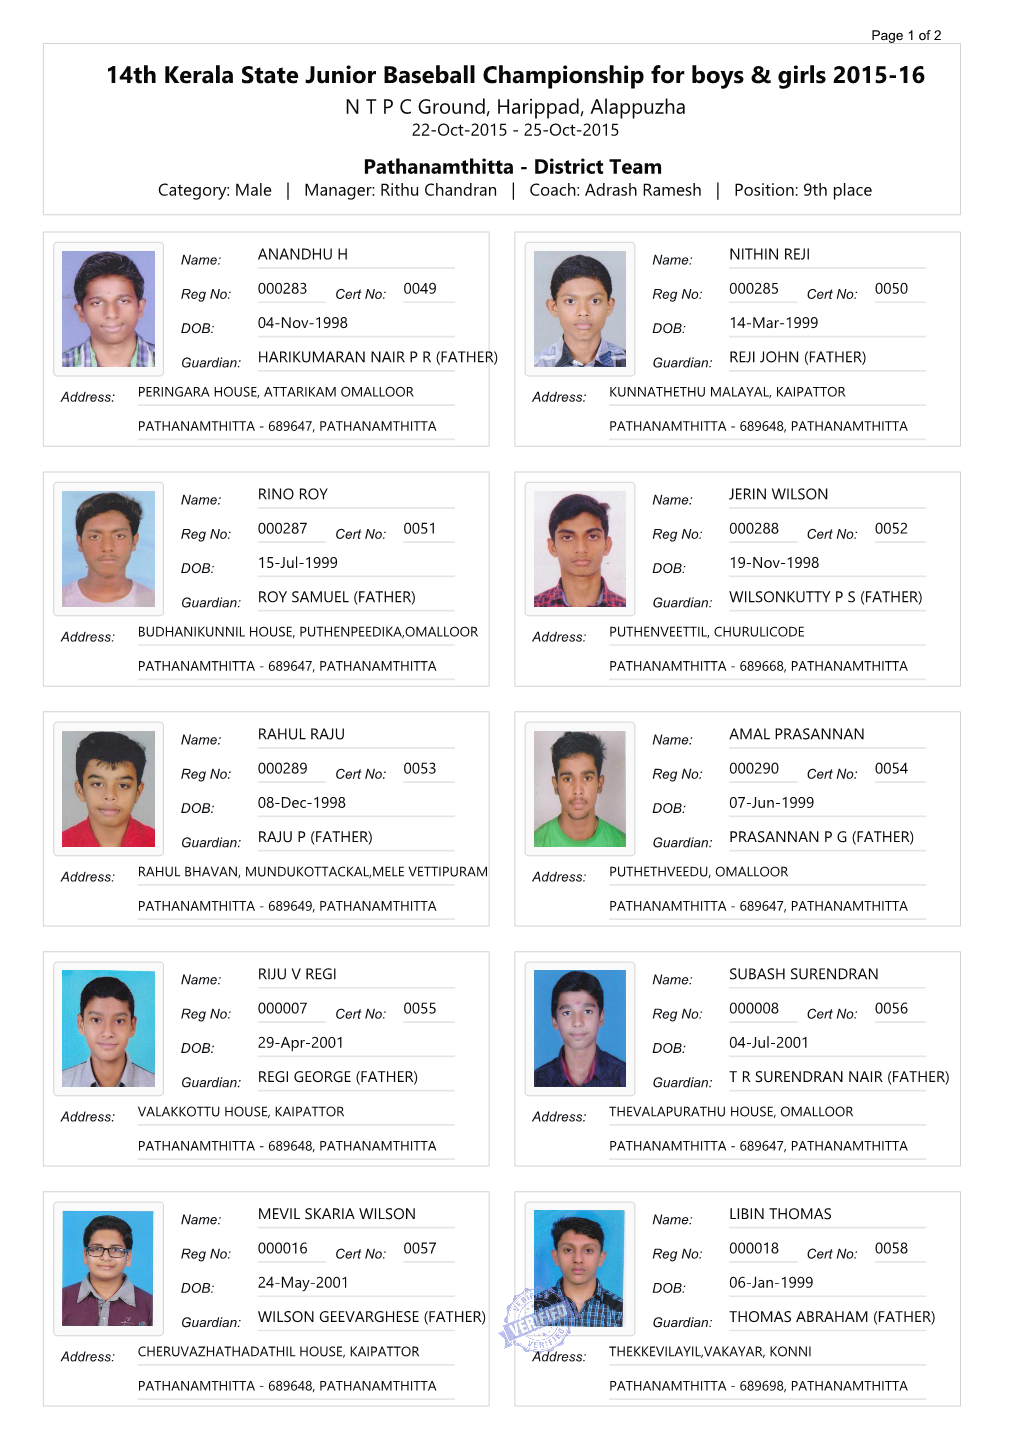 14Th Kerala State Junior Baseball Championship for Boys & Girls 2015-16